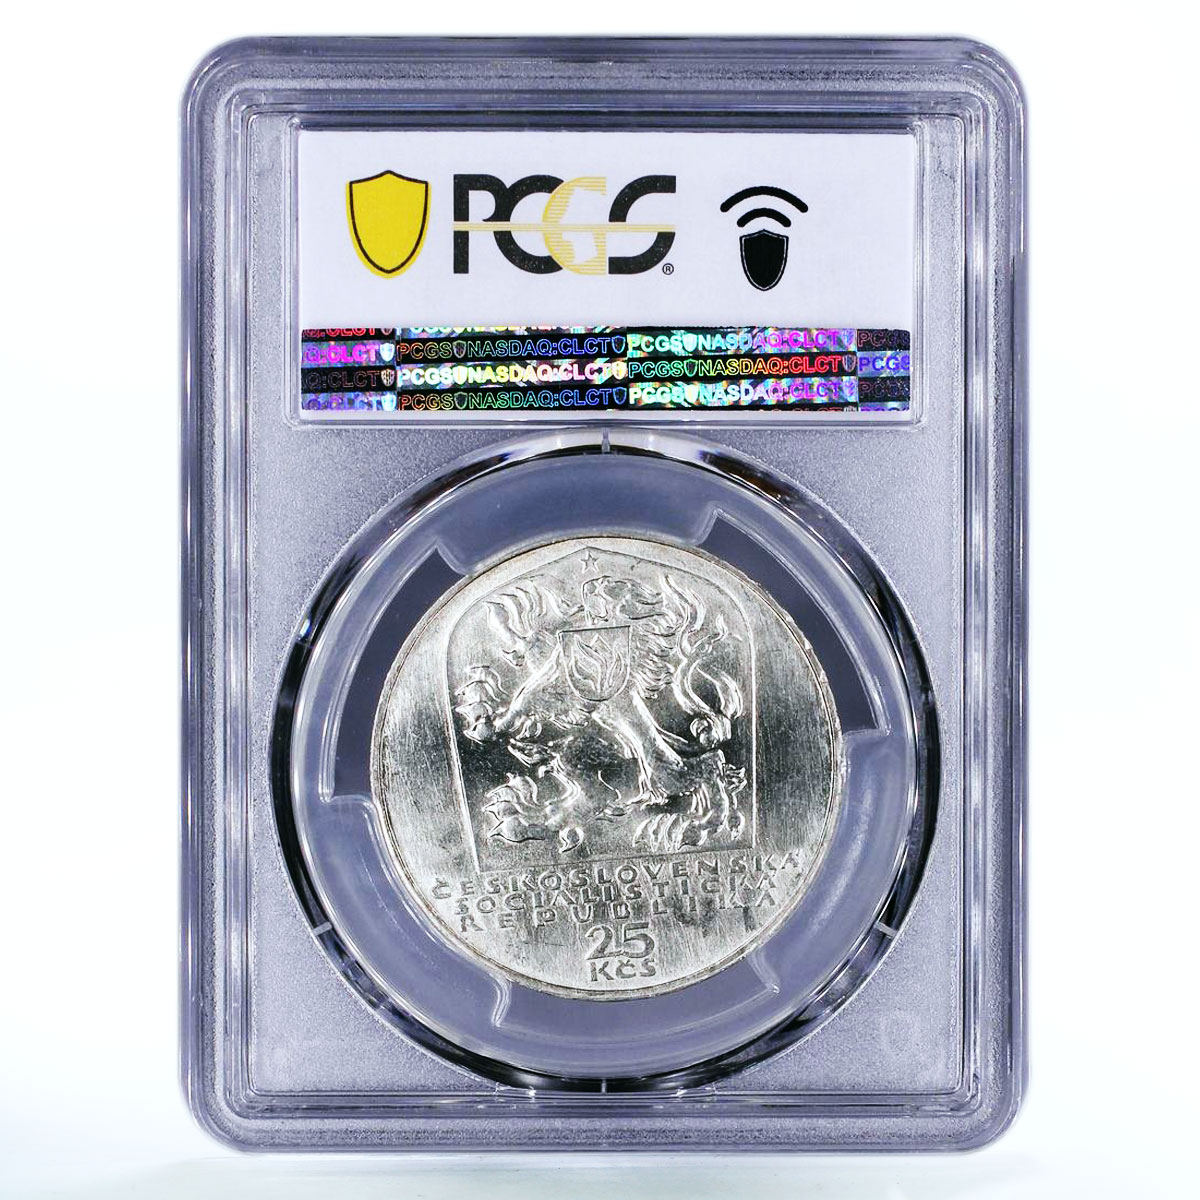 Czechoslovakia 25 korun 25 Years of Slovak Uprising MS64 PCGS silver coin 1969